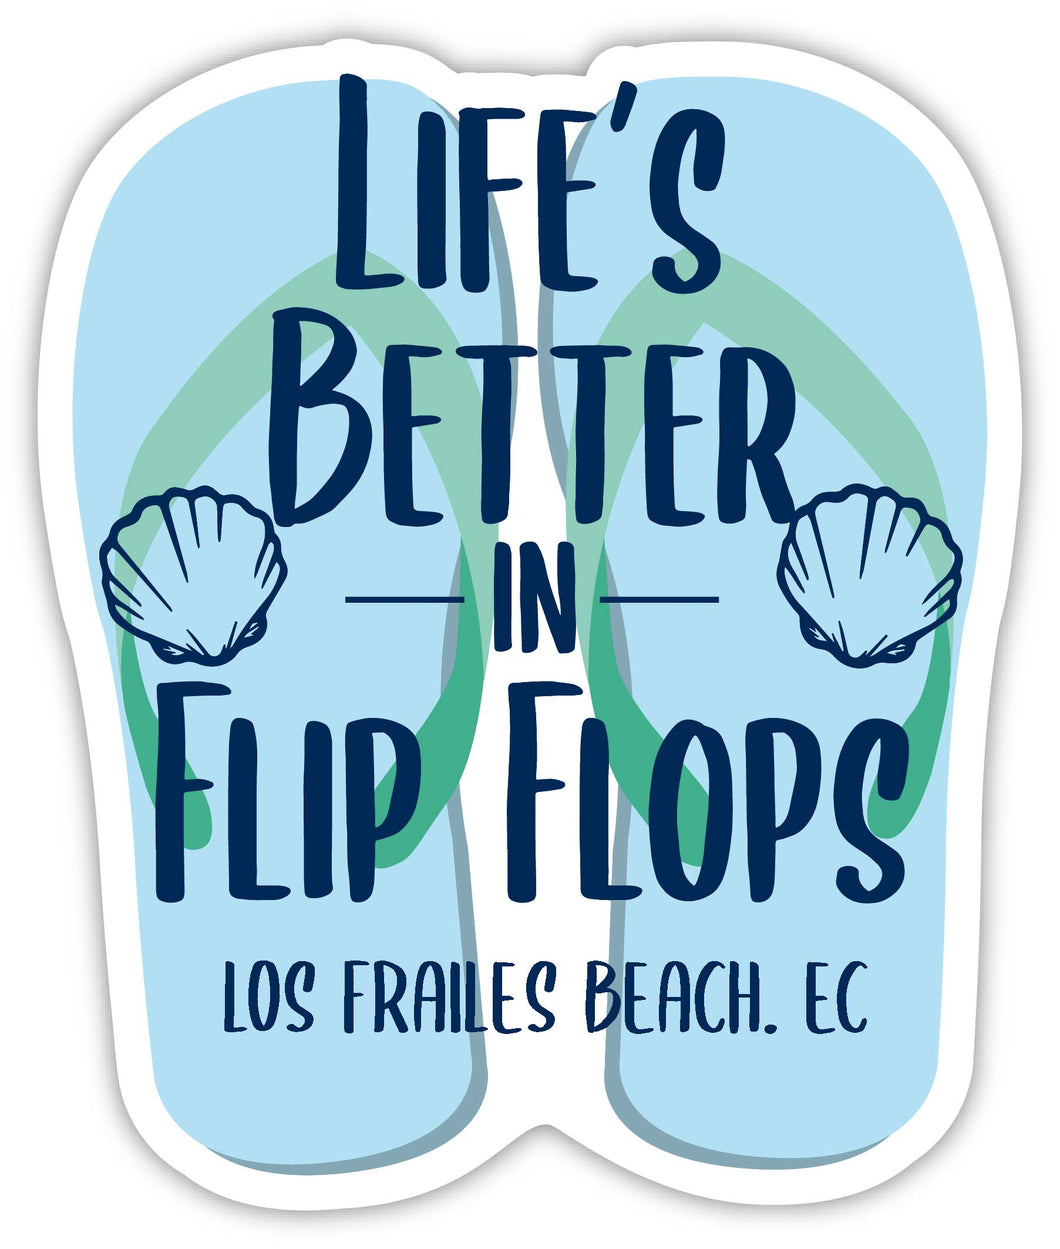 Los Frailes Beach Ecuador Souvenir 4 Inch Vinyl Decal Sticker Flip Flop Design